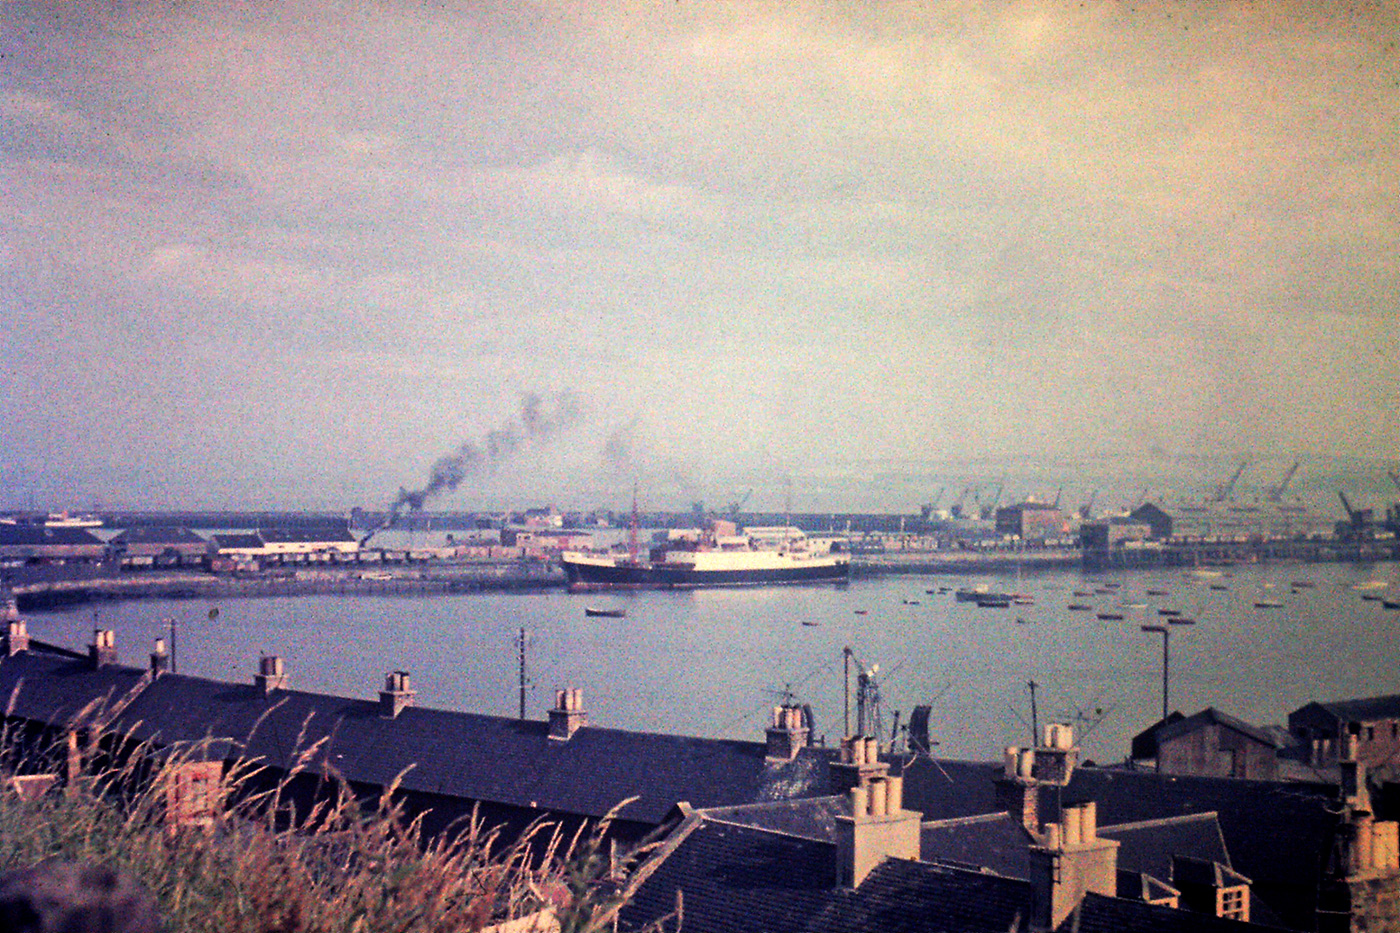 Looking down on Granton Harbour from Granton Road, 1960-62